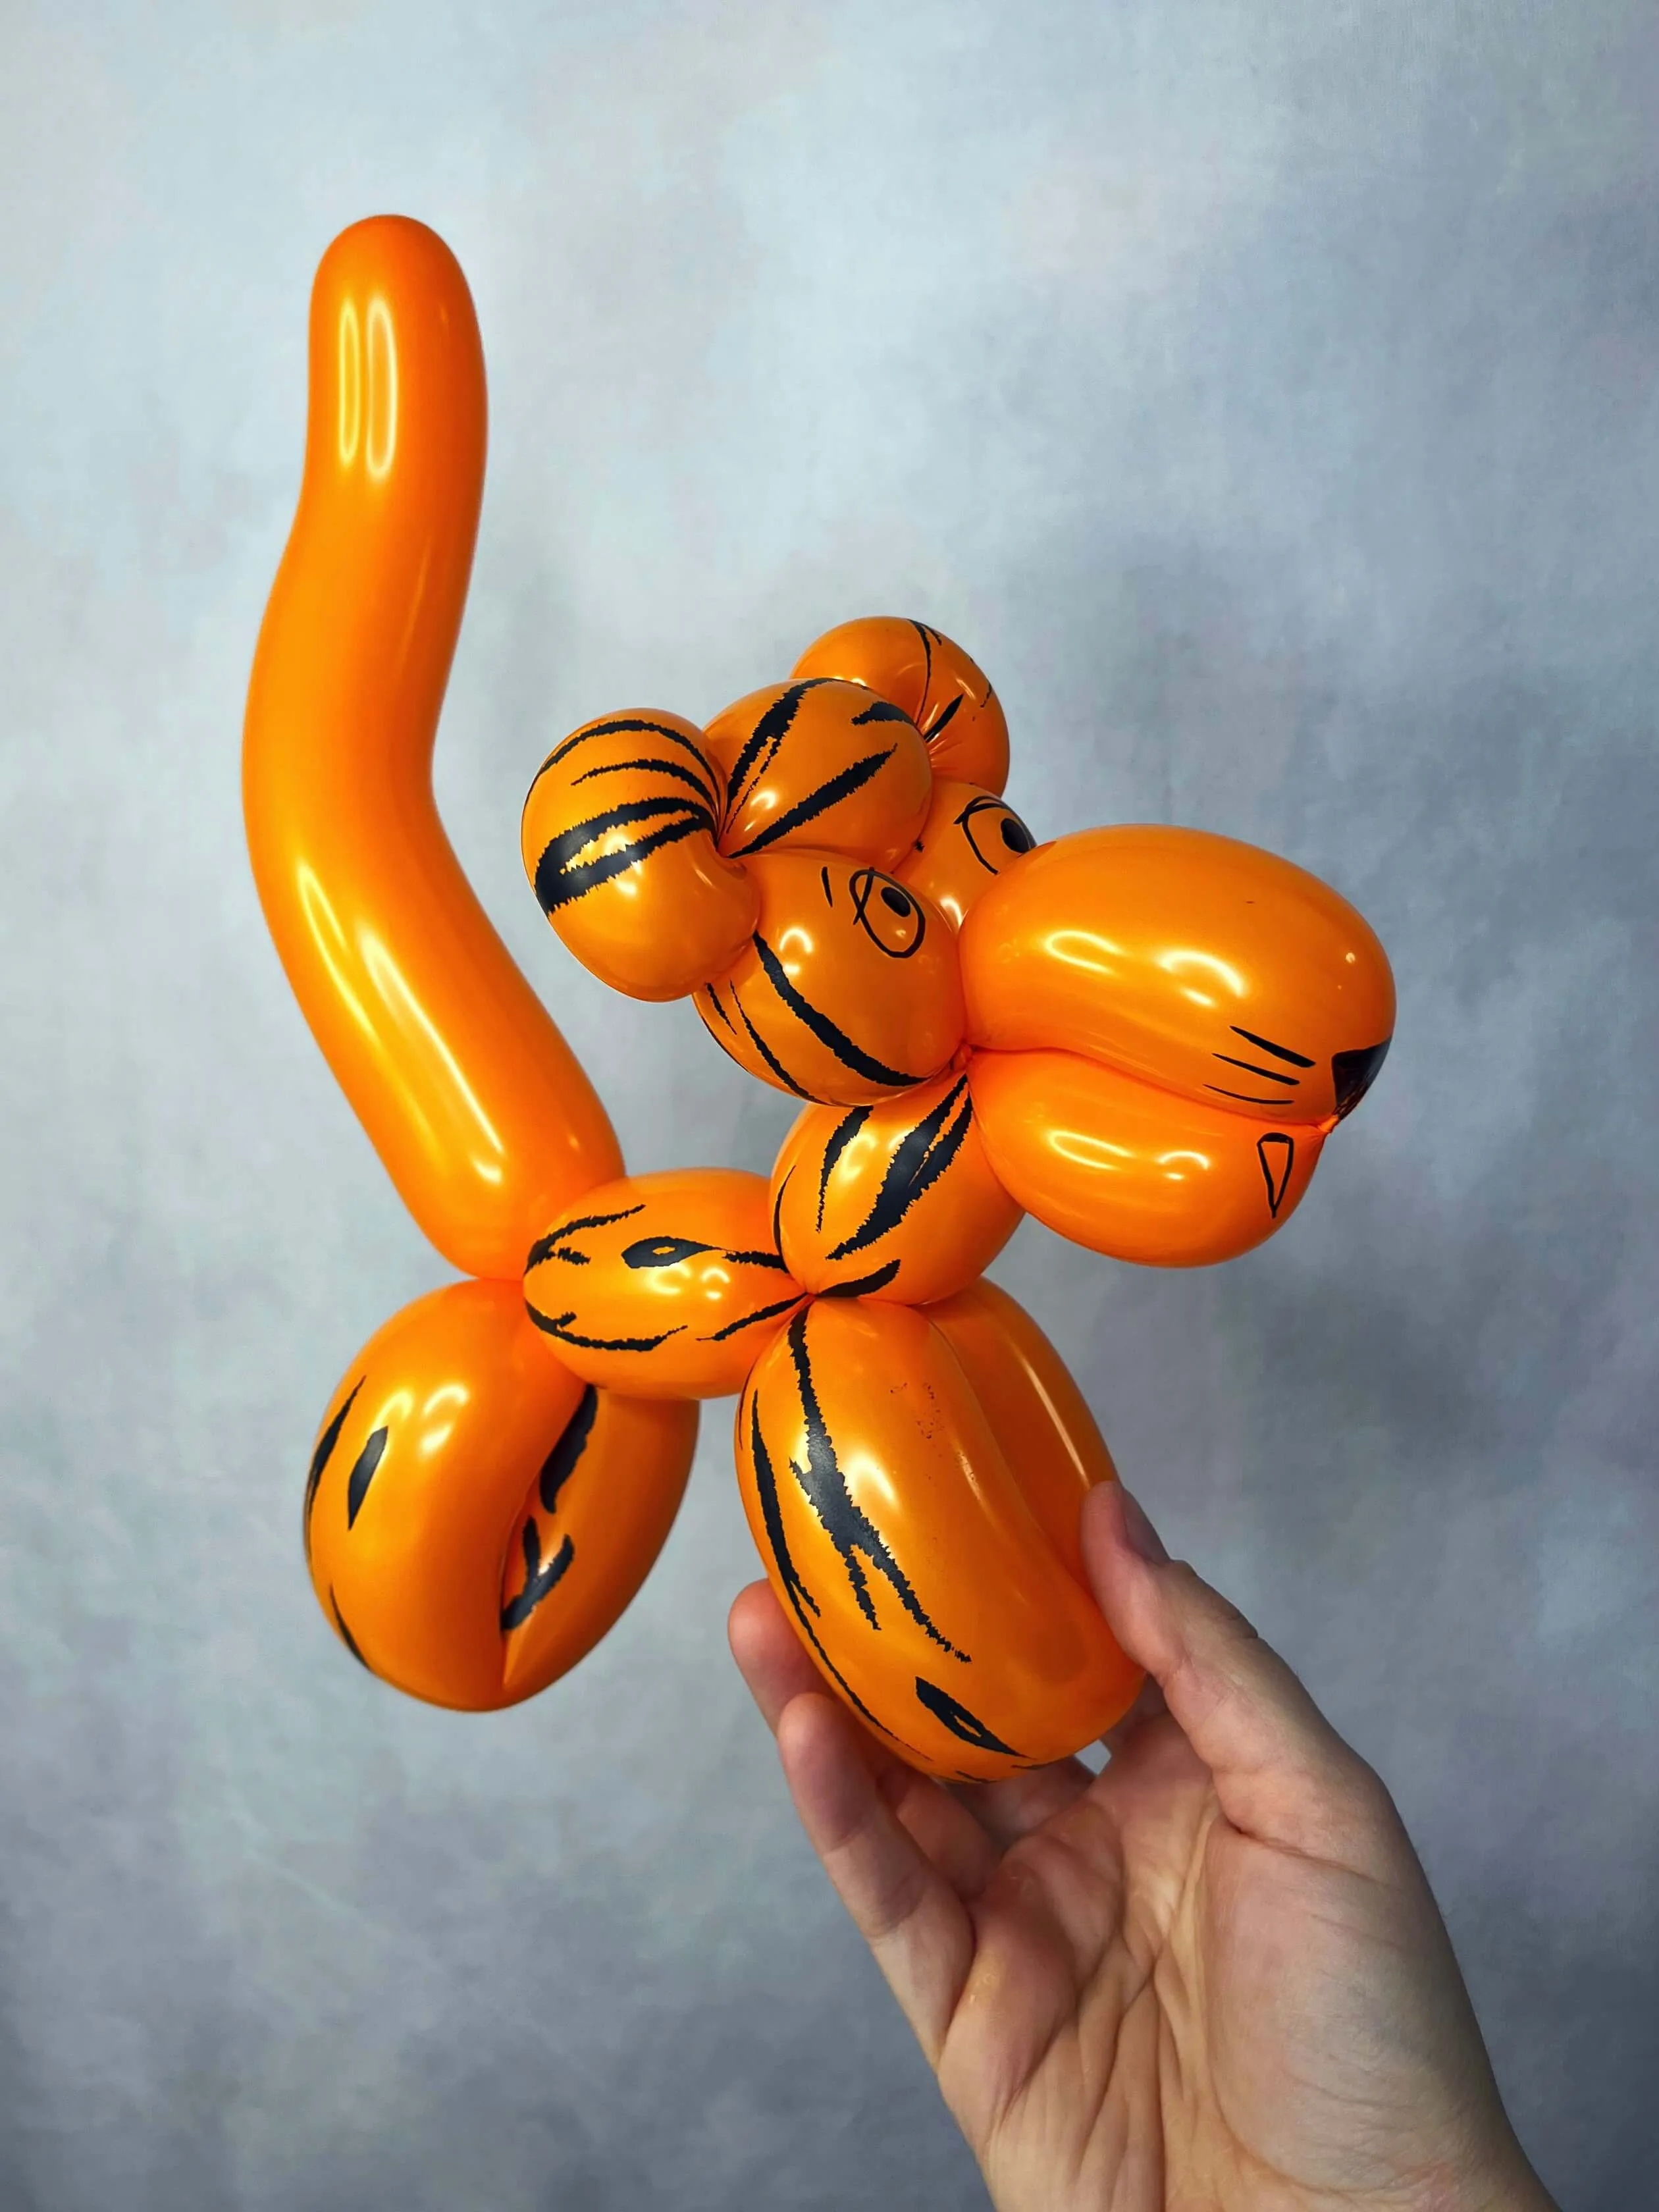 Balloon sculpture of a tiger